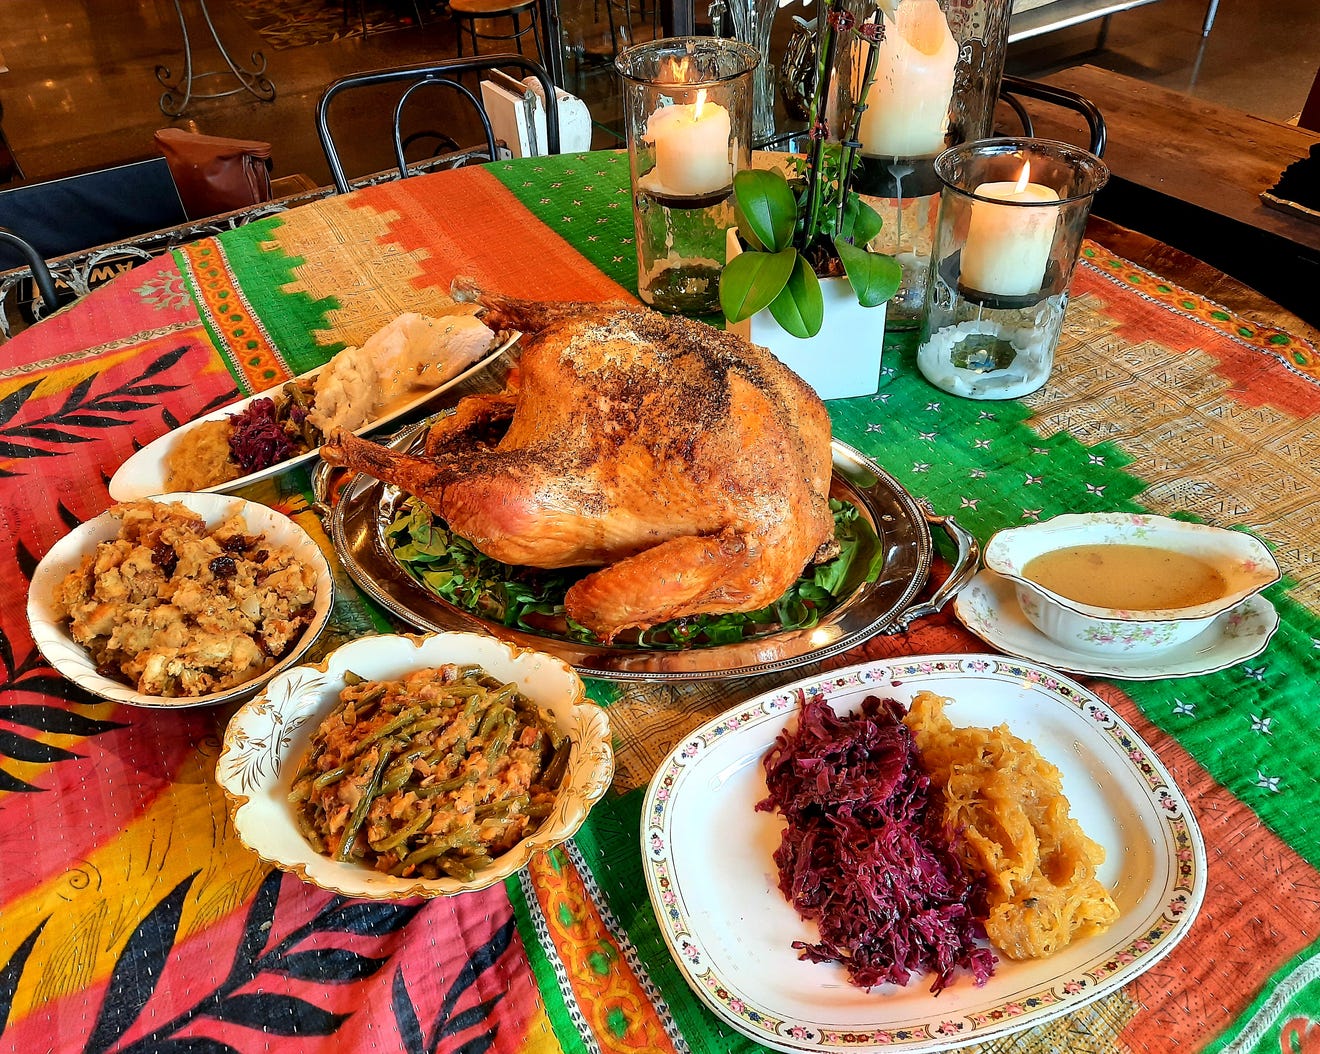 Detroit area restaurants have Thanksgiving meals to go